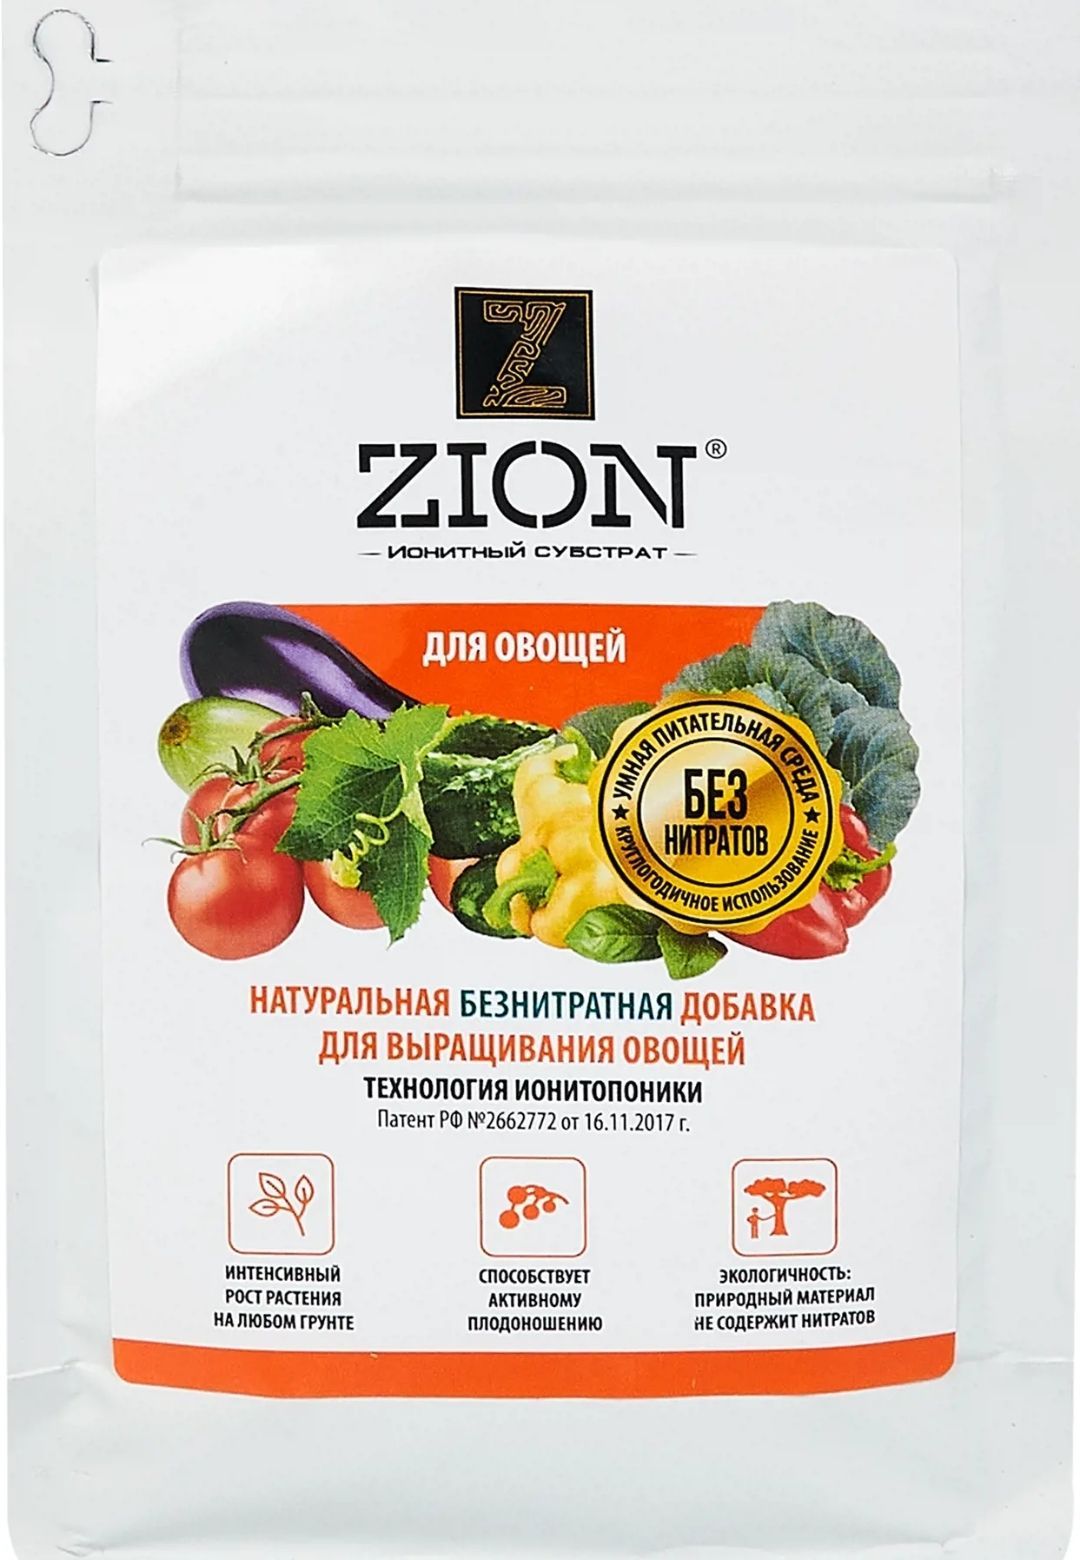 Zion Цион для овощей. Zion для овощей в Леруа Мерлен. Озон удобрение Цион для овощей. Цион для овощей купить. Цион для овощей отзывы